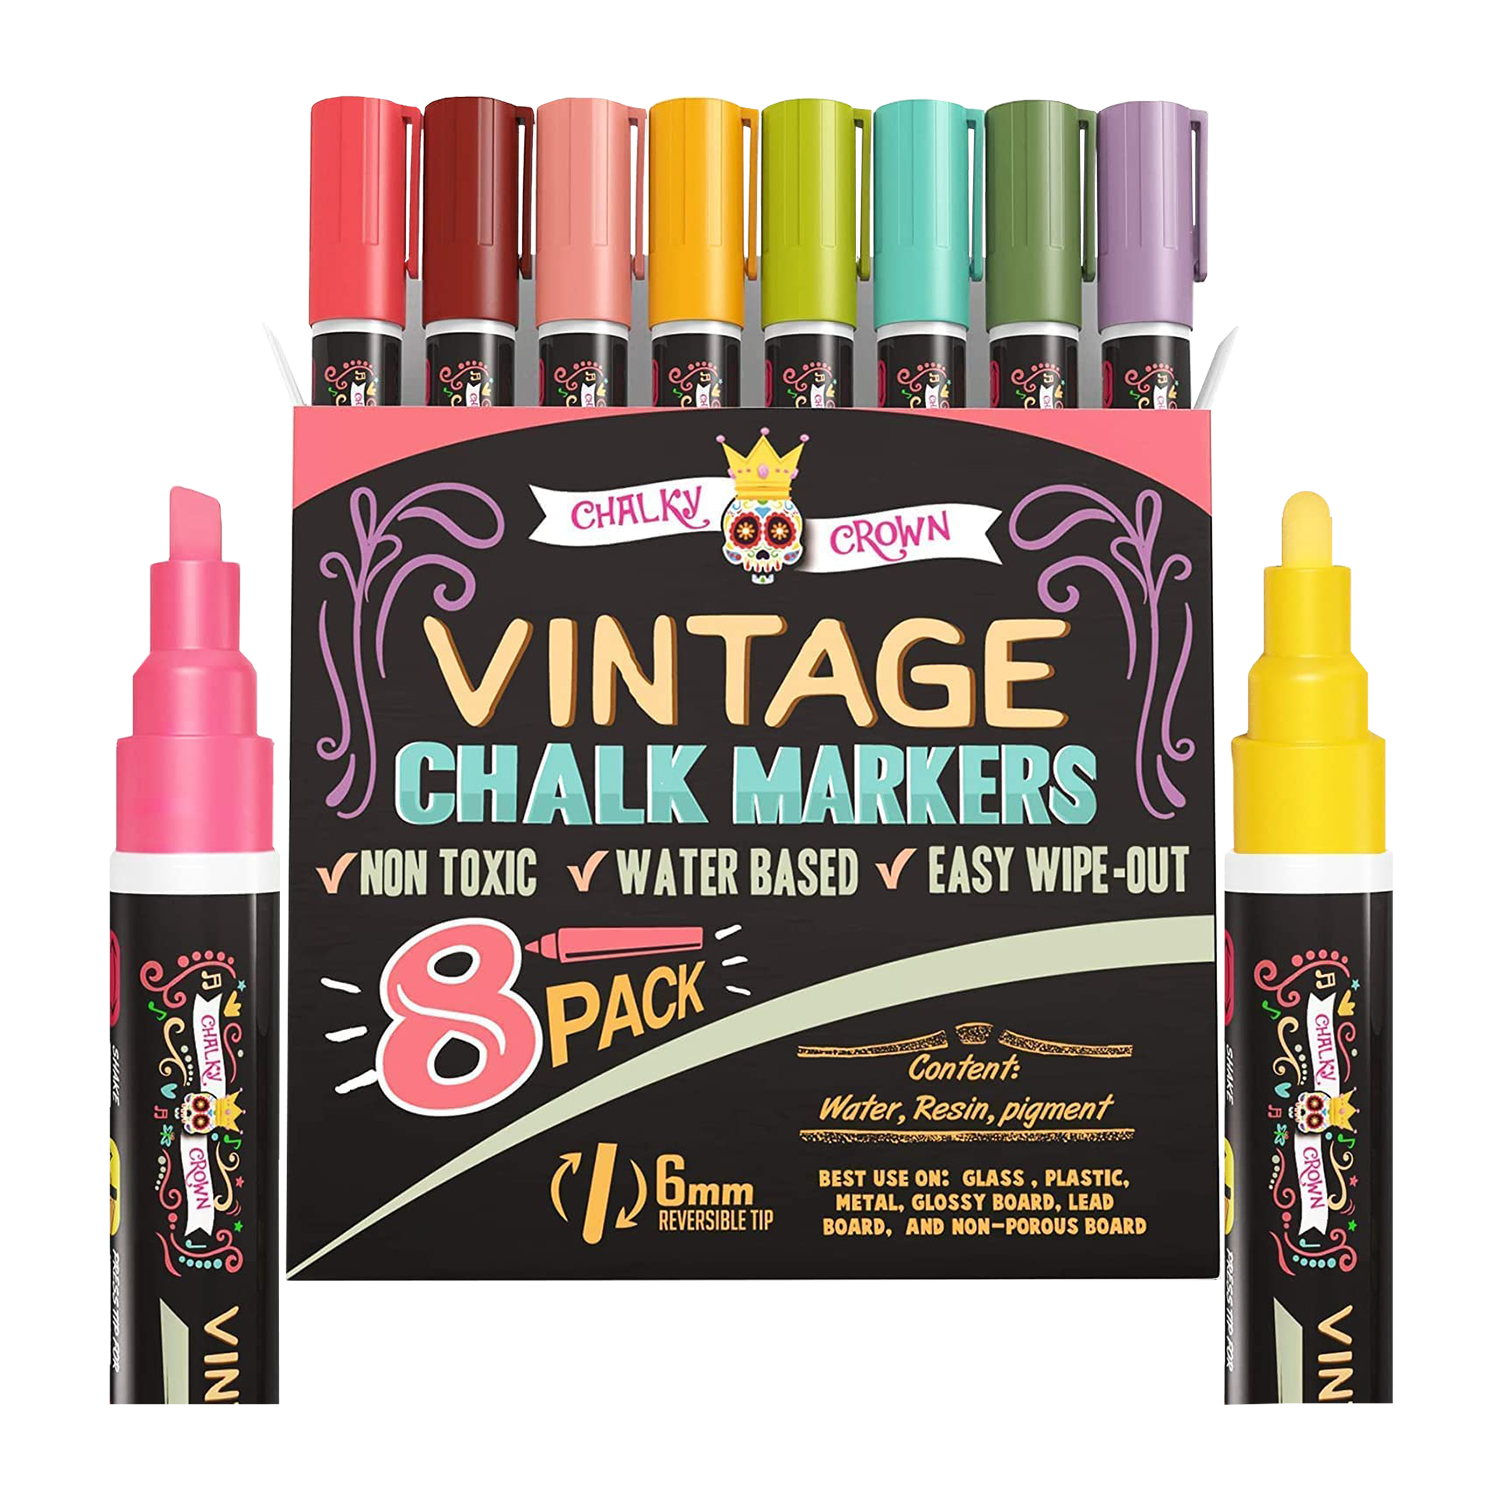 Liquid Chalk Markers - Set Of 8 6 Mm Fine Tip Chalk Pen + Free 24X  Chalkboard Stickers